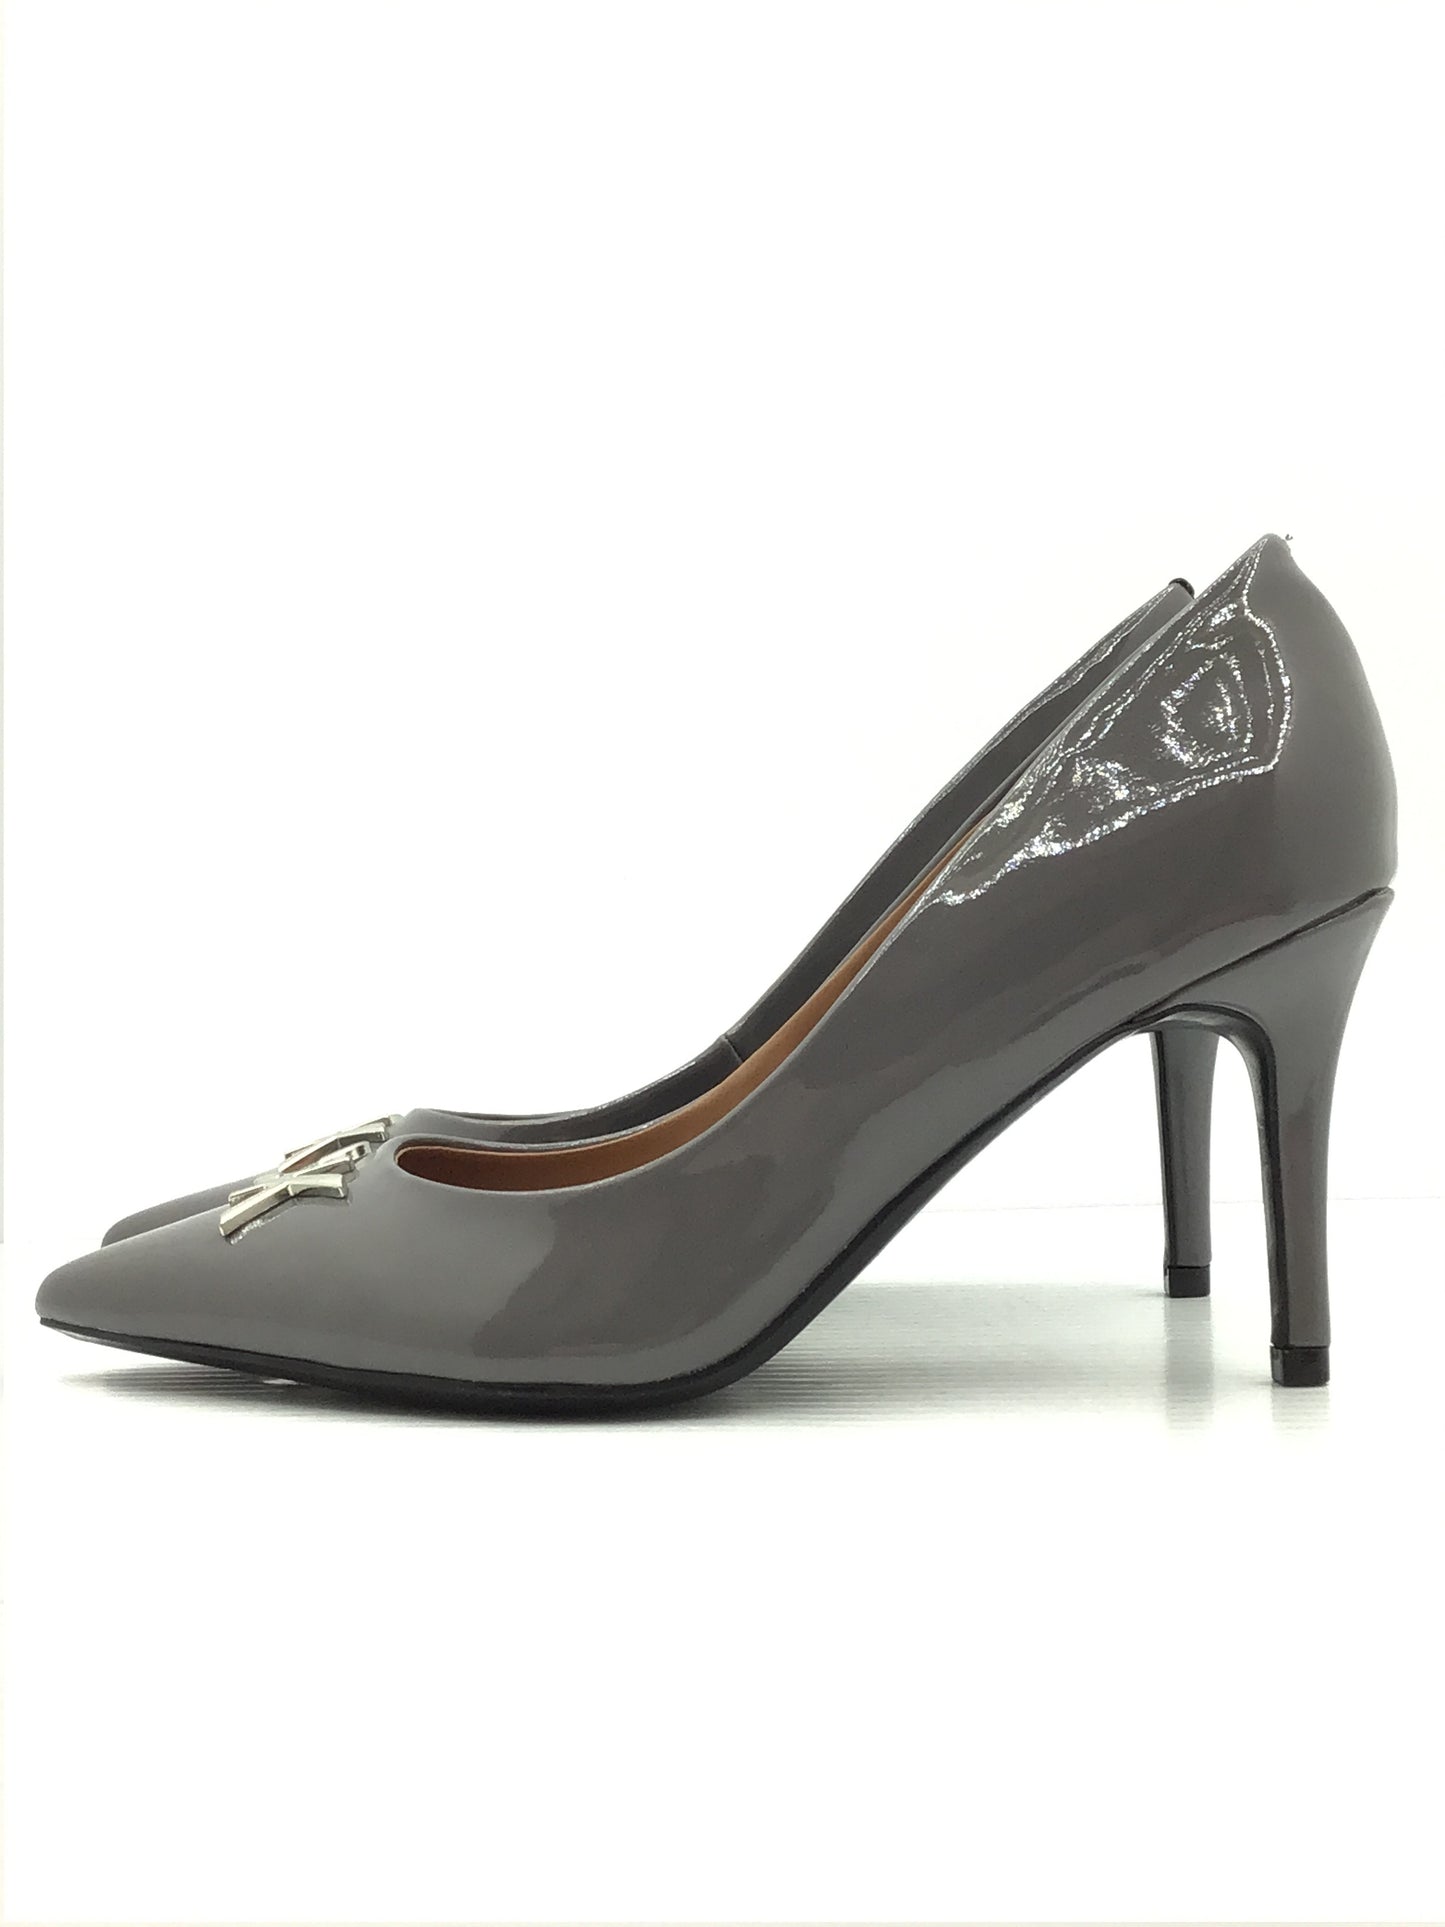 Shoes Heels Stiletto By Calvin Klein  Size: 7